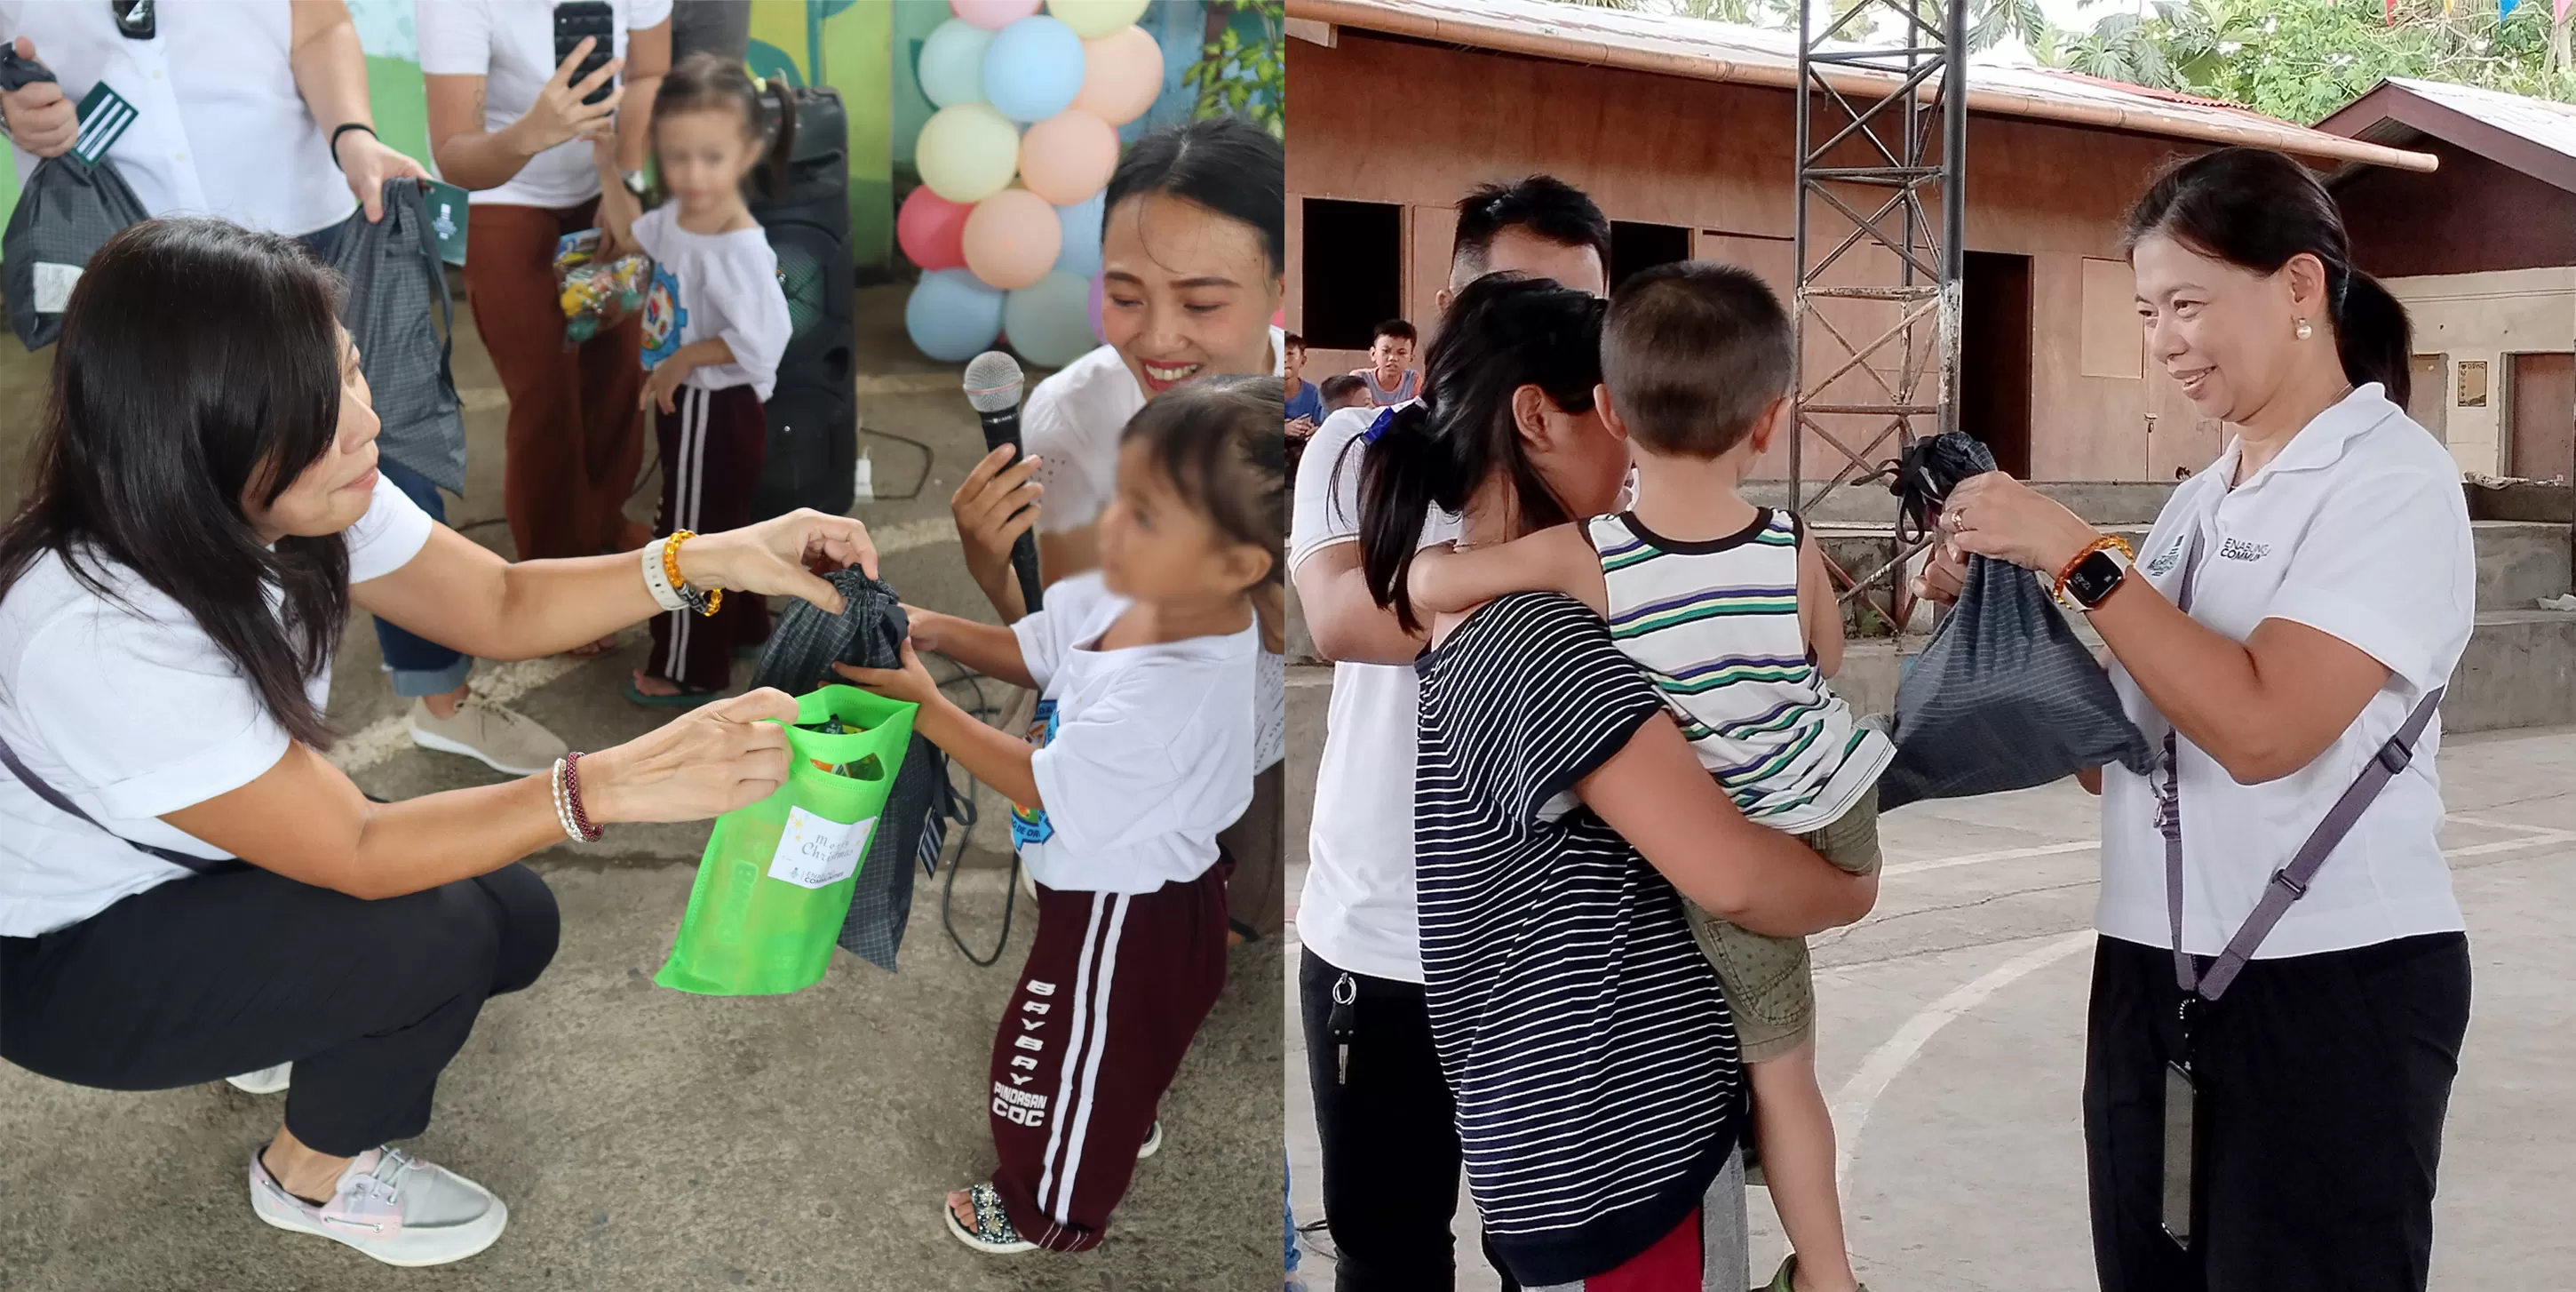 Torre Lorenzo brings smiles to children of Pindasan, Davao de Oro with Christmas gift-giving